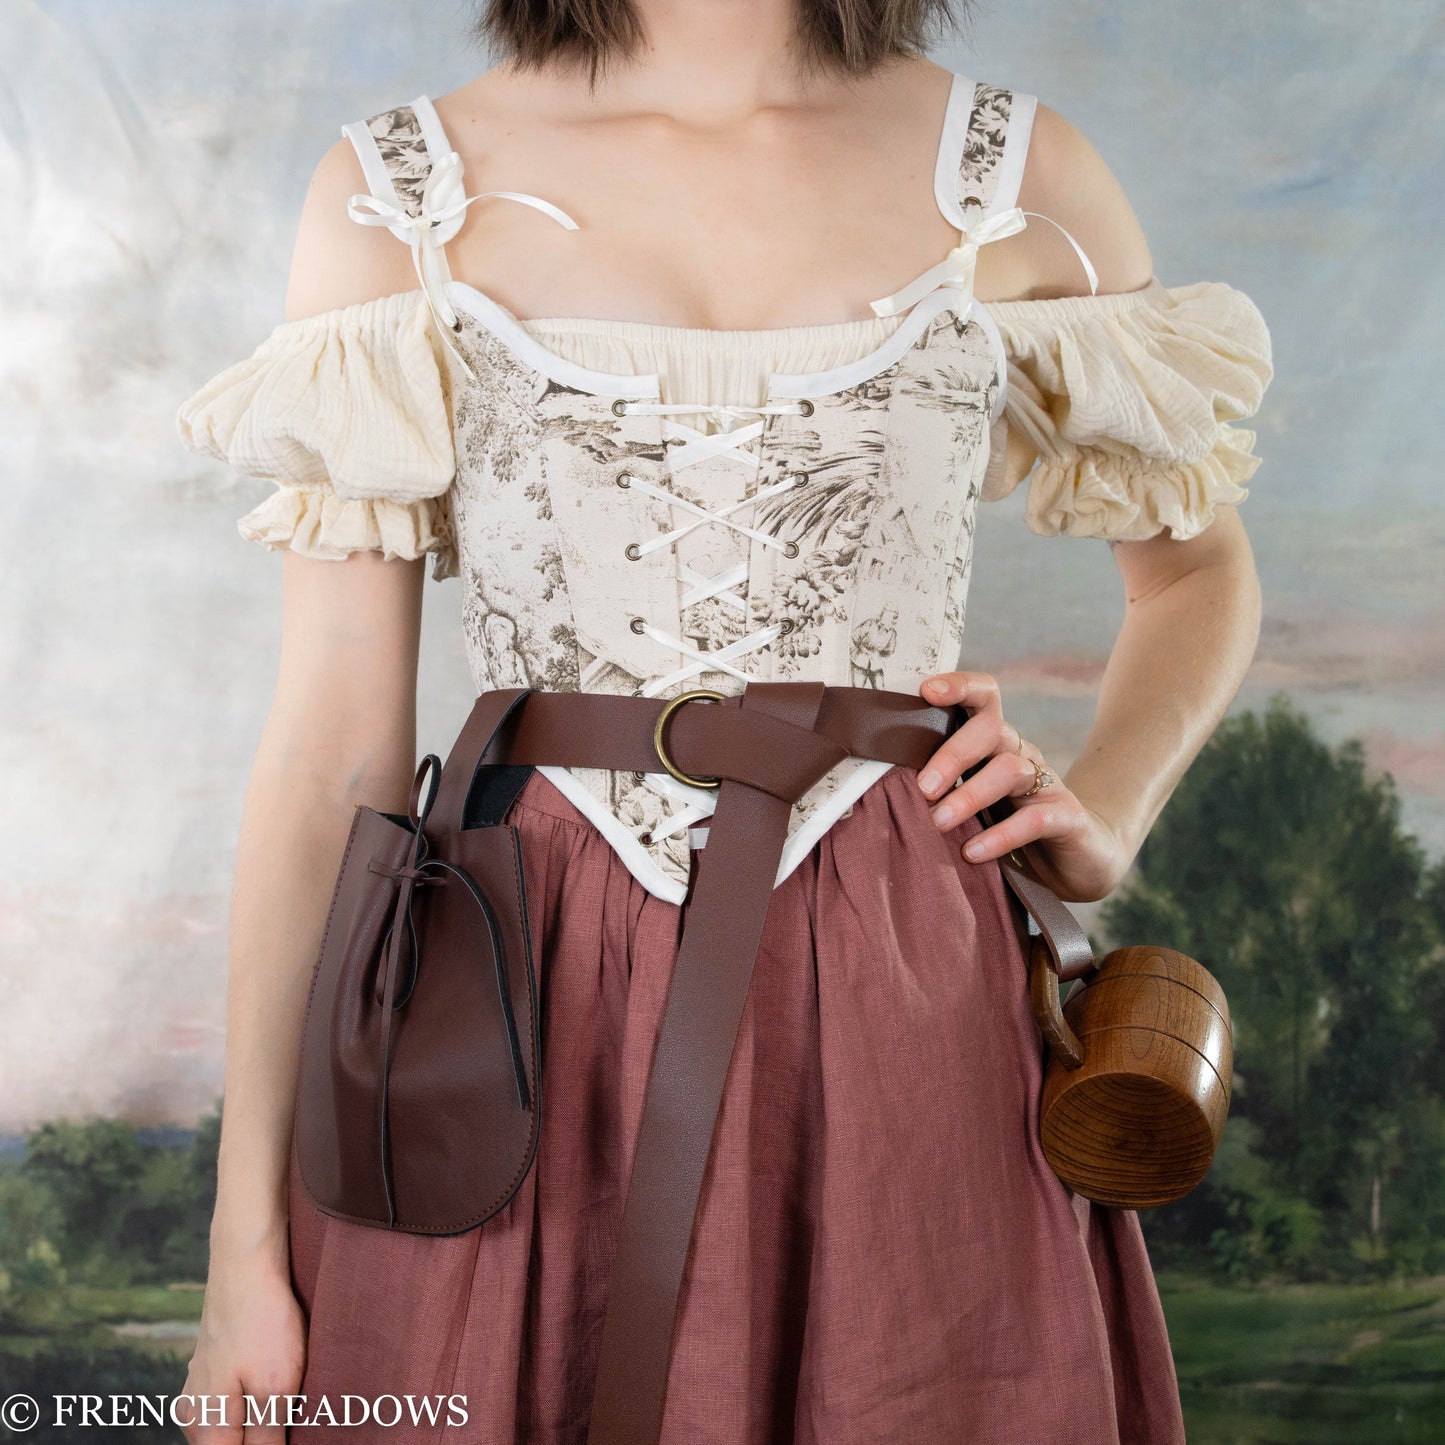 women's renaissance faire costume with light brown corset, rose colored linen skirt and renaissance belt accessories